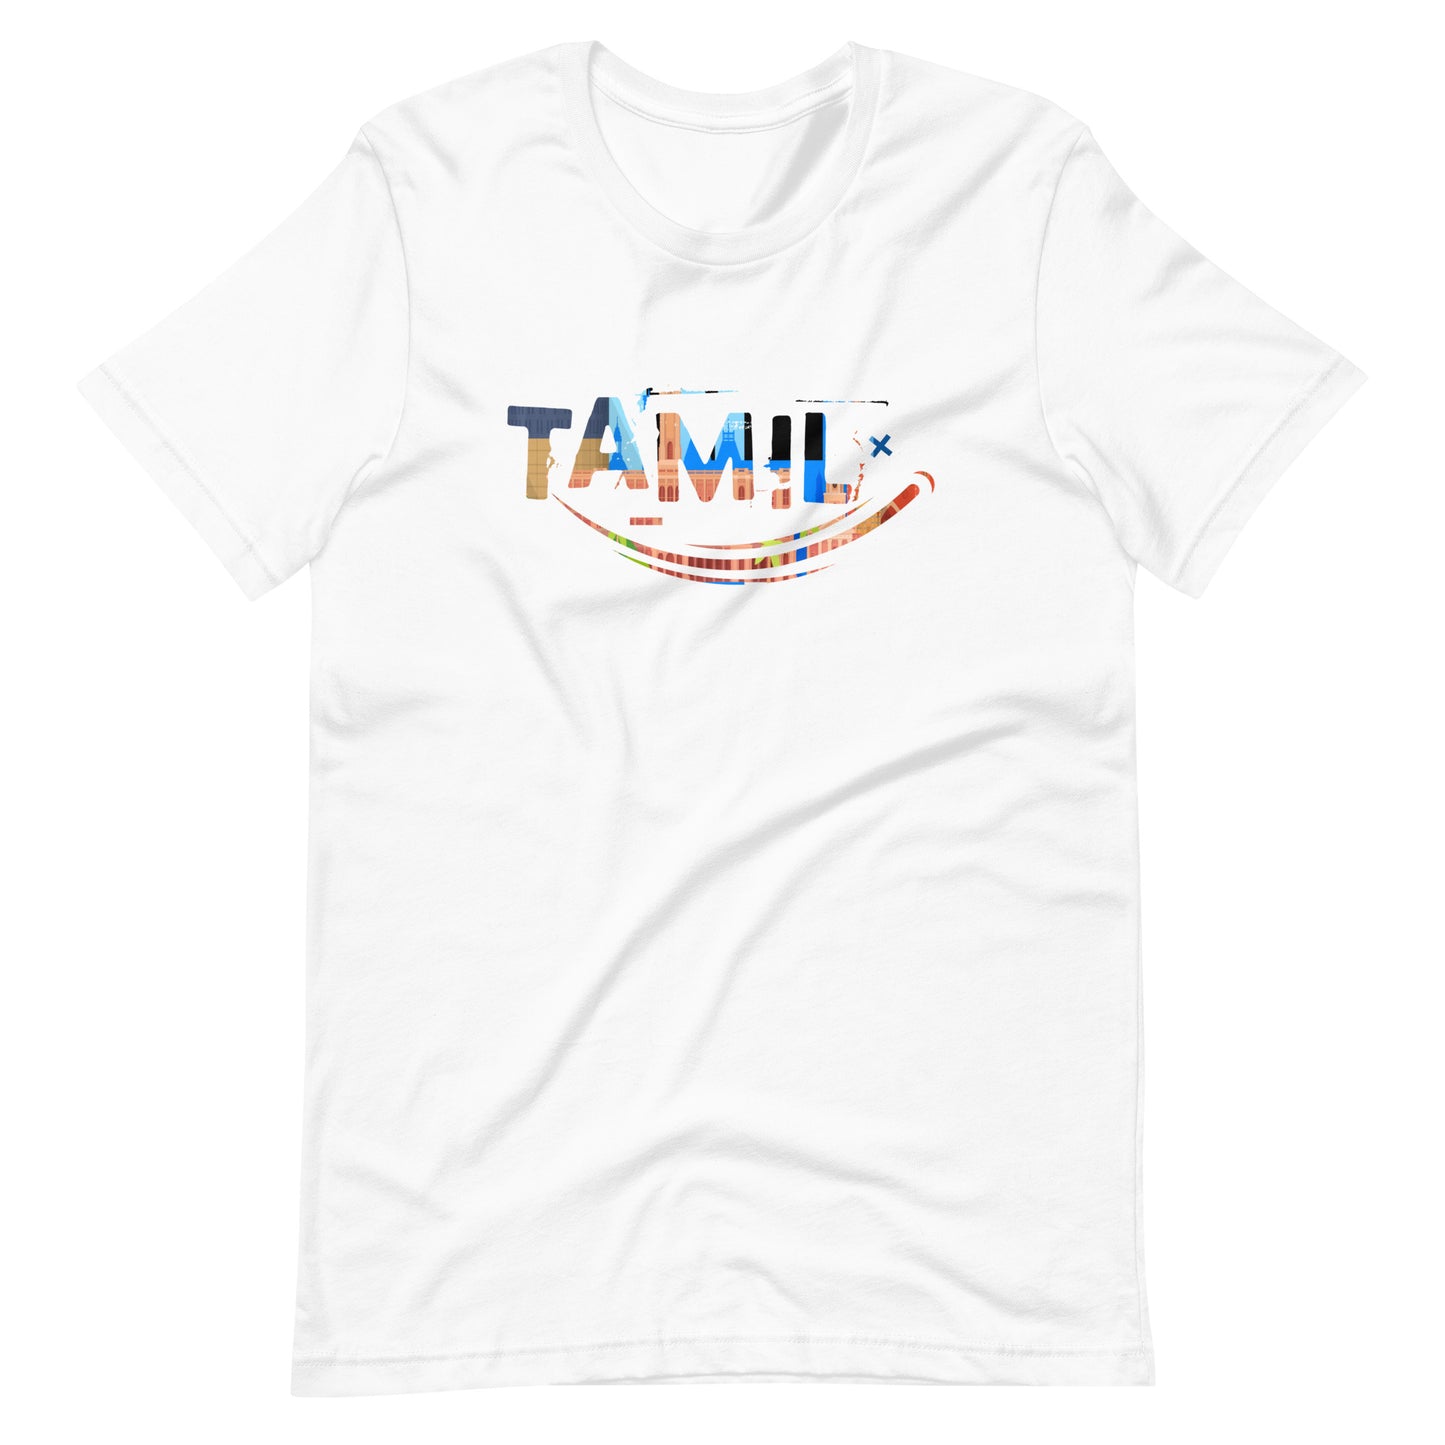 Unisex t-shirt "Tamil Smile"